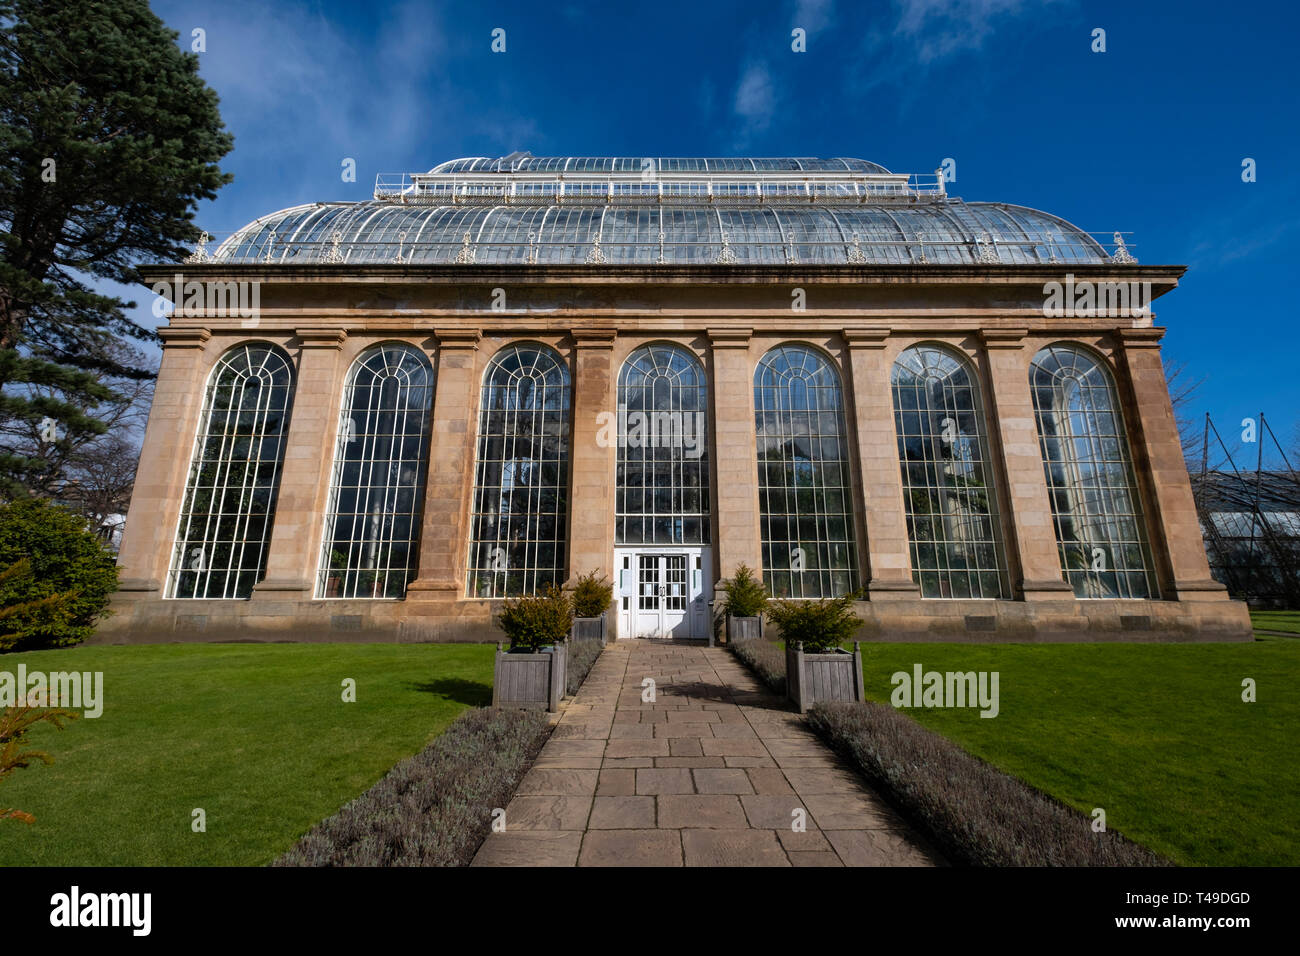 The Palm House greenhouse at the Royal Botanic Garden in Edinburgh, Scotland, United Kingdom Stock Photo